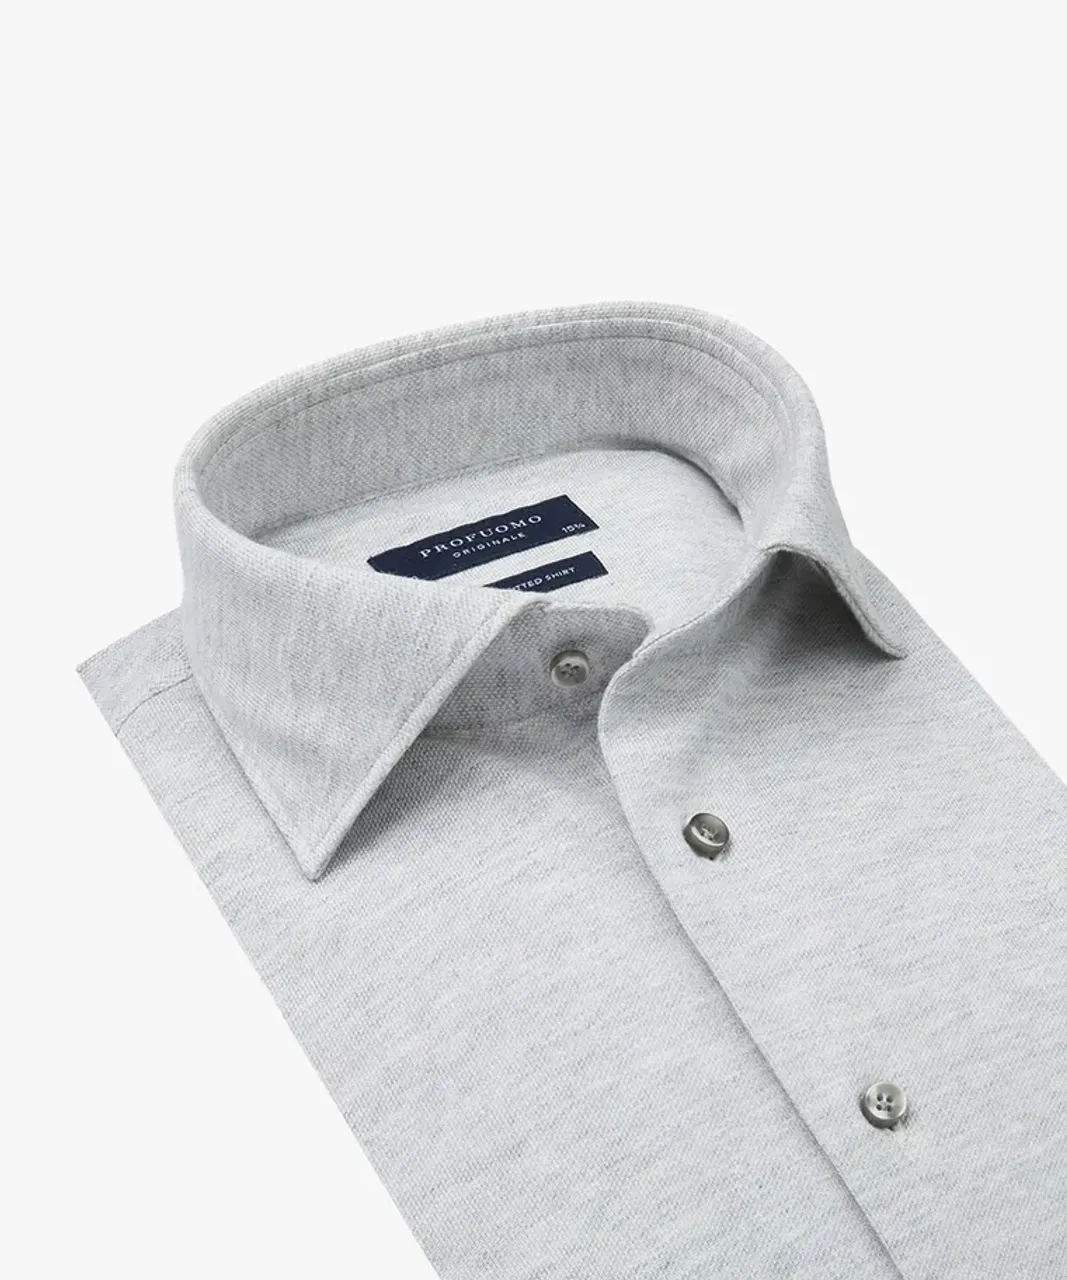 Profuomo Overhemd The Knitted Shirt Grijs Melange   